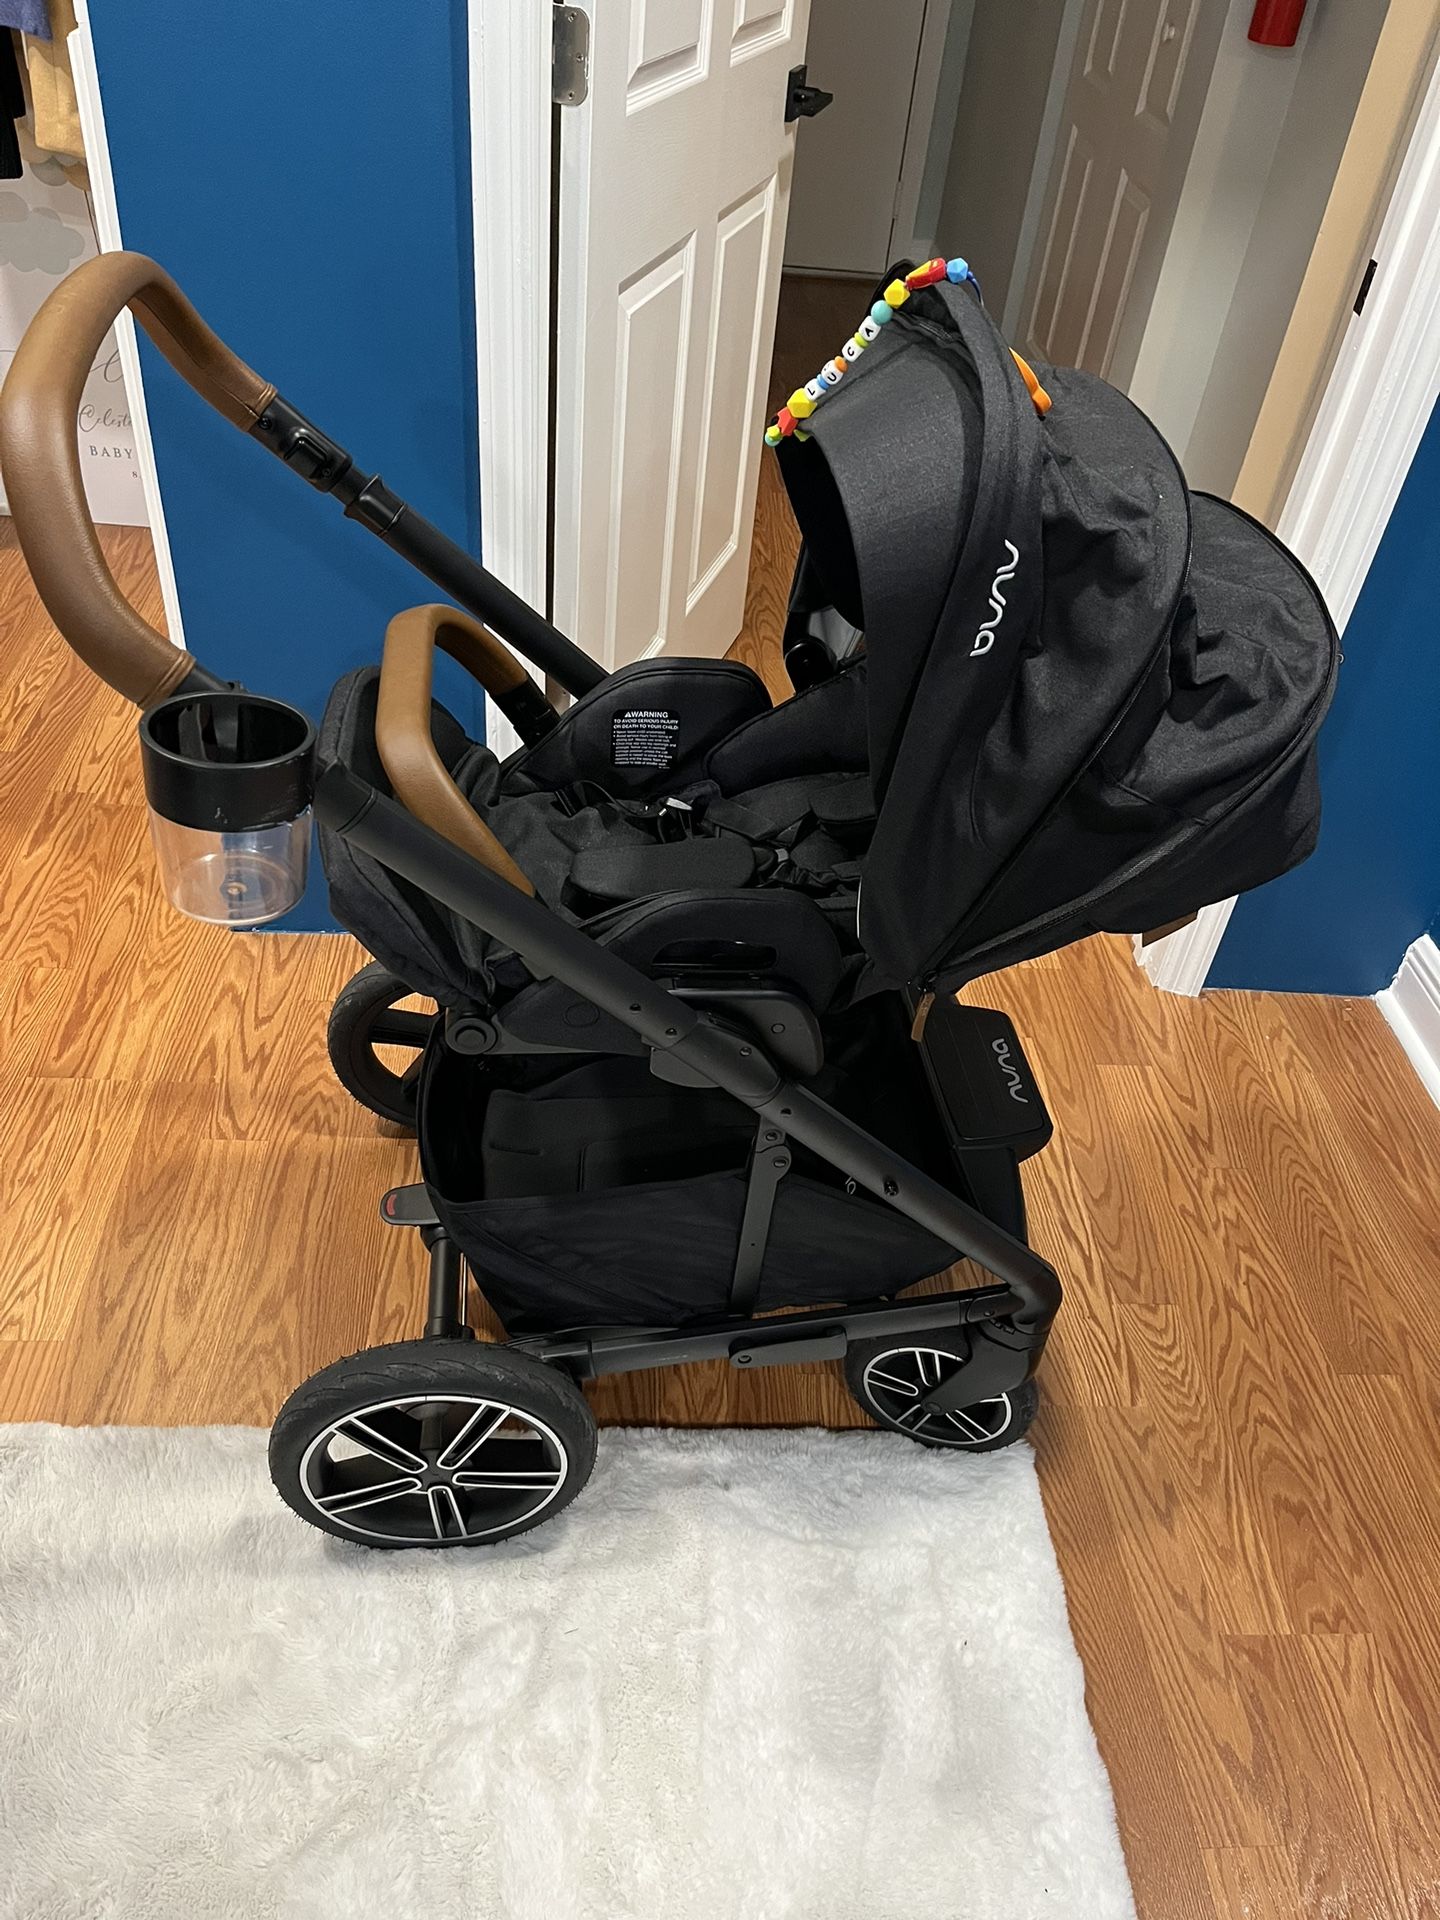 Nuna Stroller, Travel System & Baby Seat